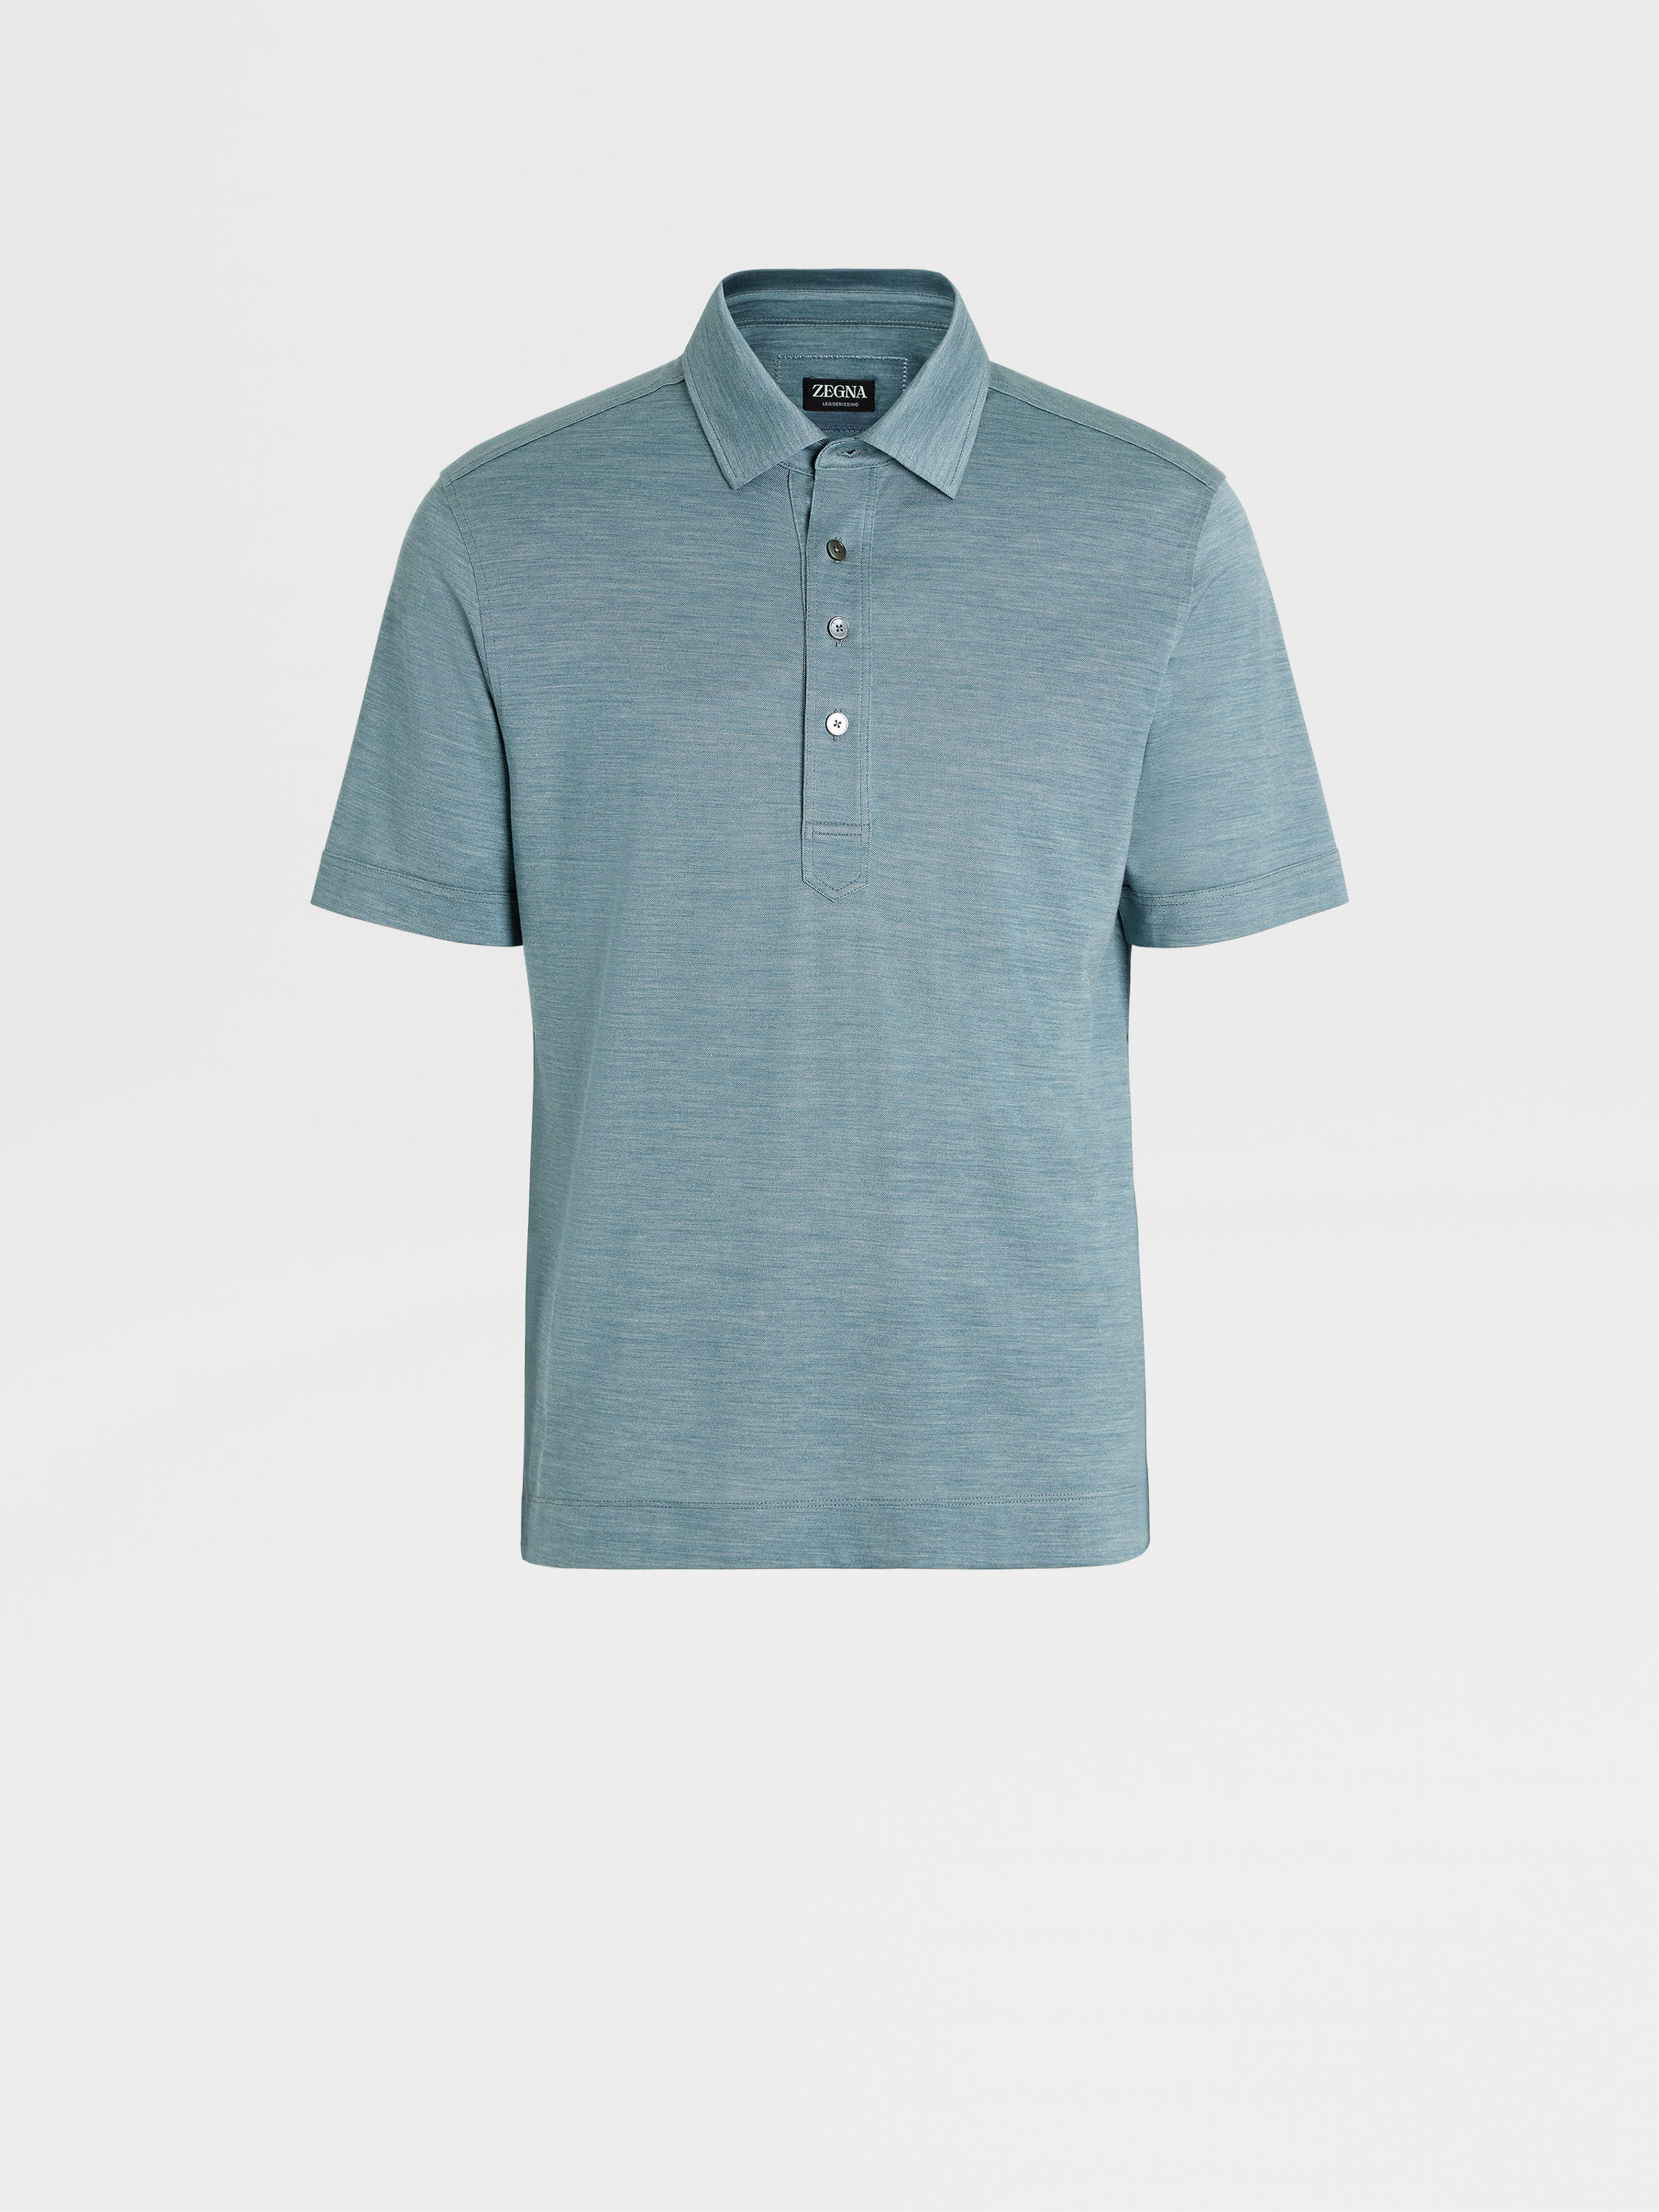 Teal Blue and Light Grey Leggerissimo Cotton and Silk Polo Shirt FW23  26596590 | Zegna MY